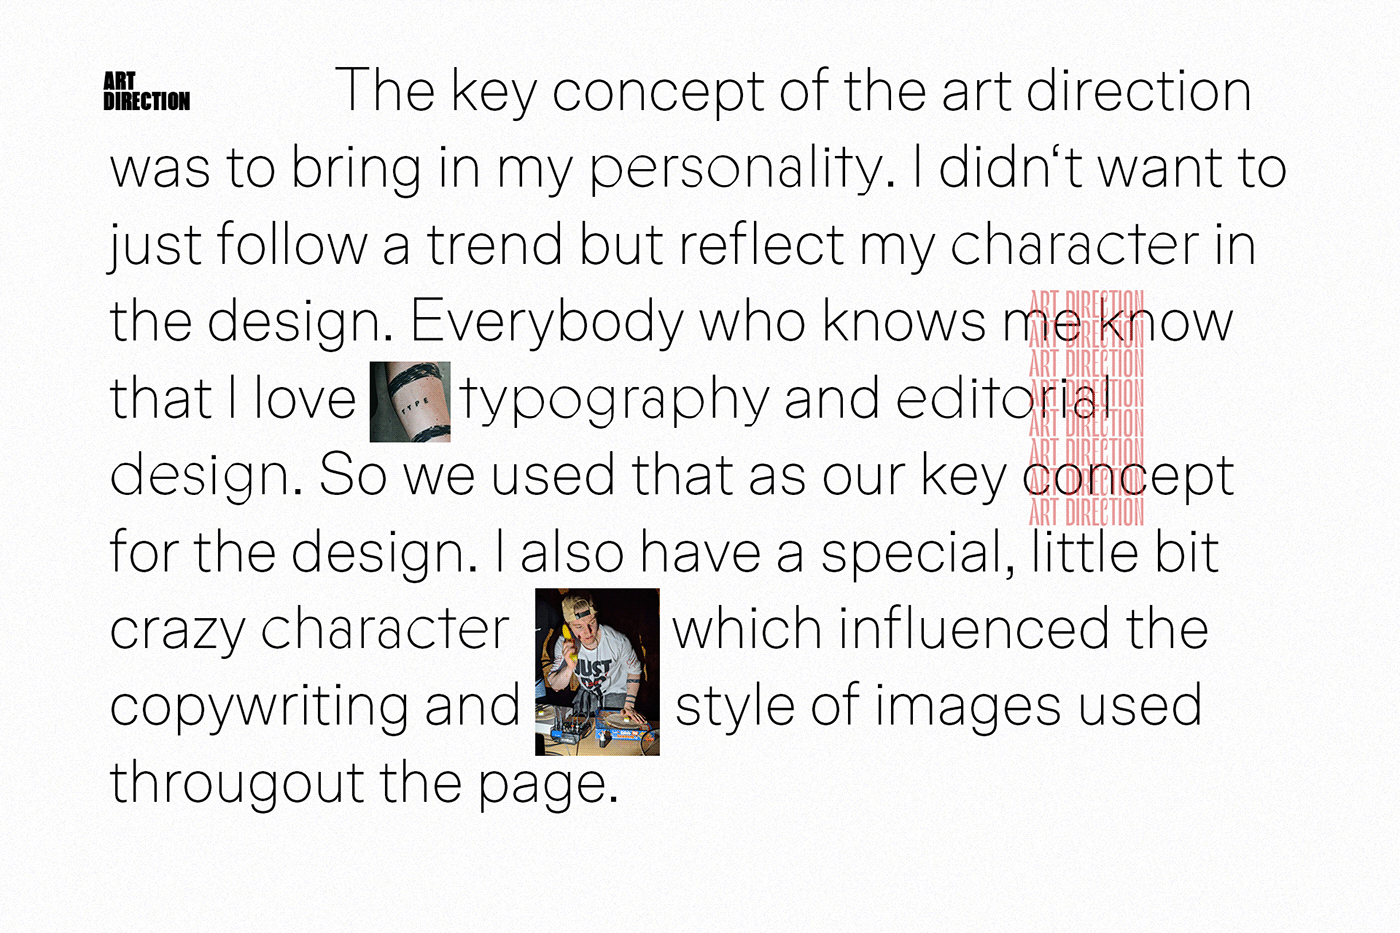 animation  branding  Corporate Design Creative Director designer identity personal portfolio portfolio typography   Web Experience